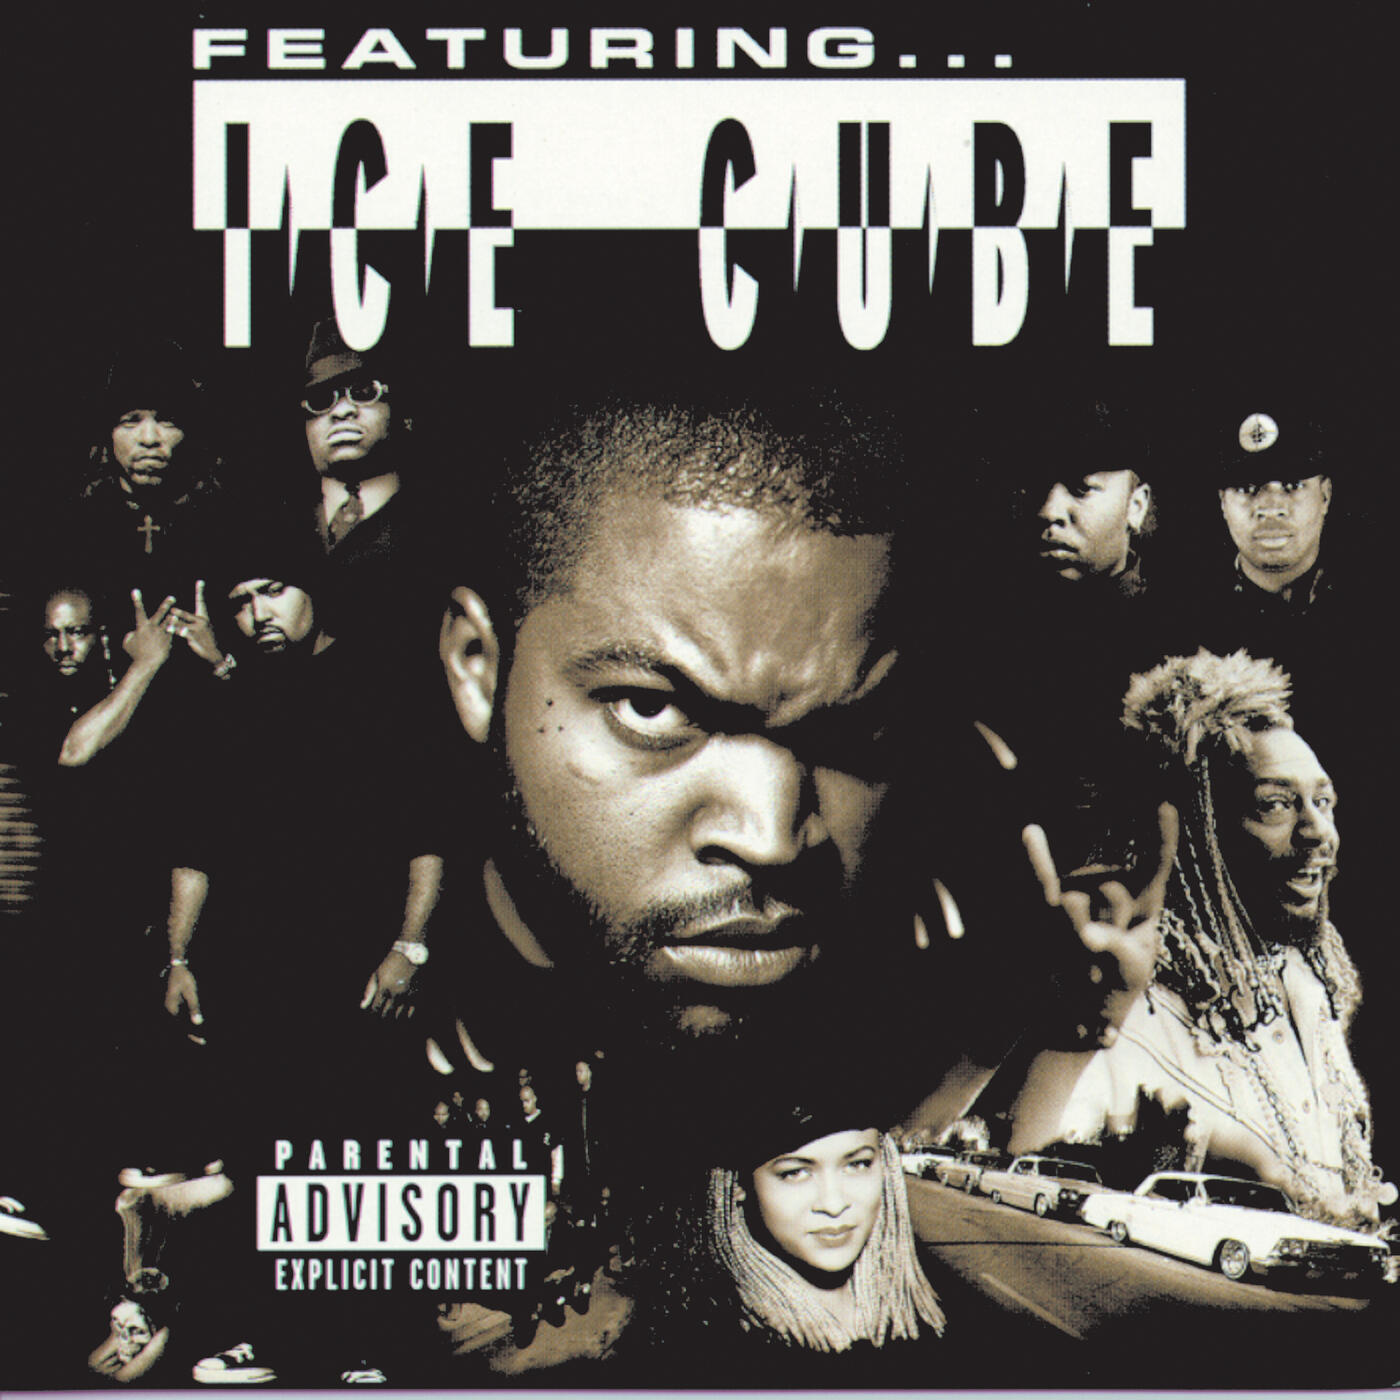 Ice cube down down. Ice Cube. Ice Cube альбомы. Ice Cube обложка. Ice Cube обложки альбомов.